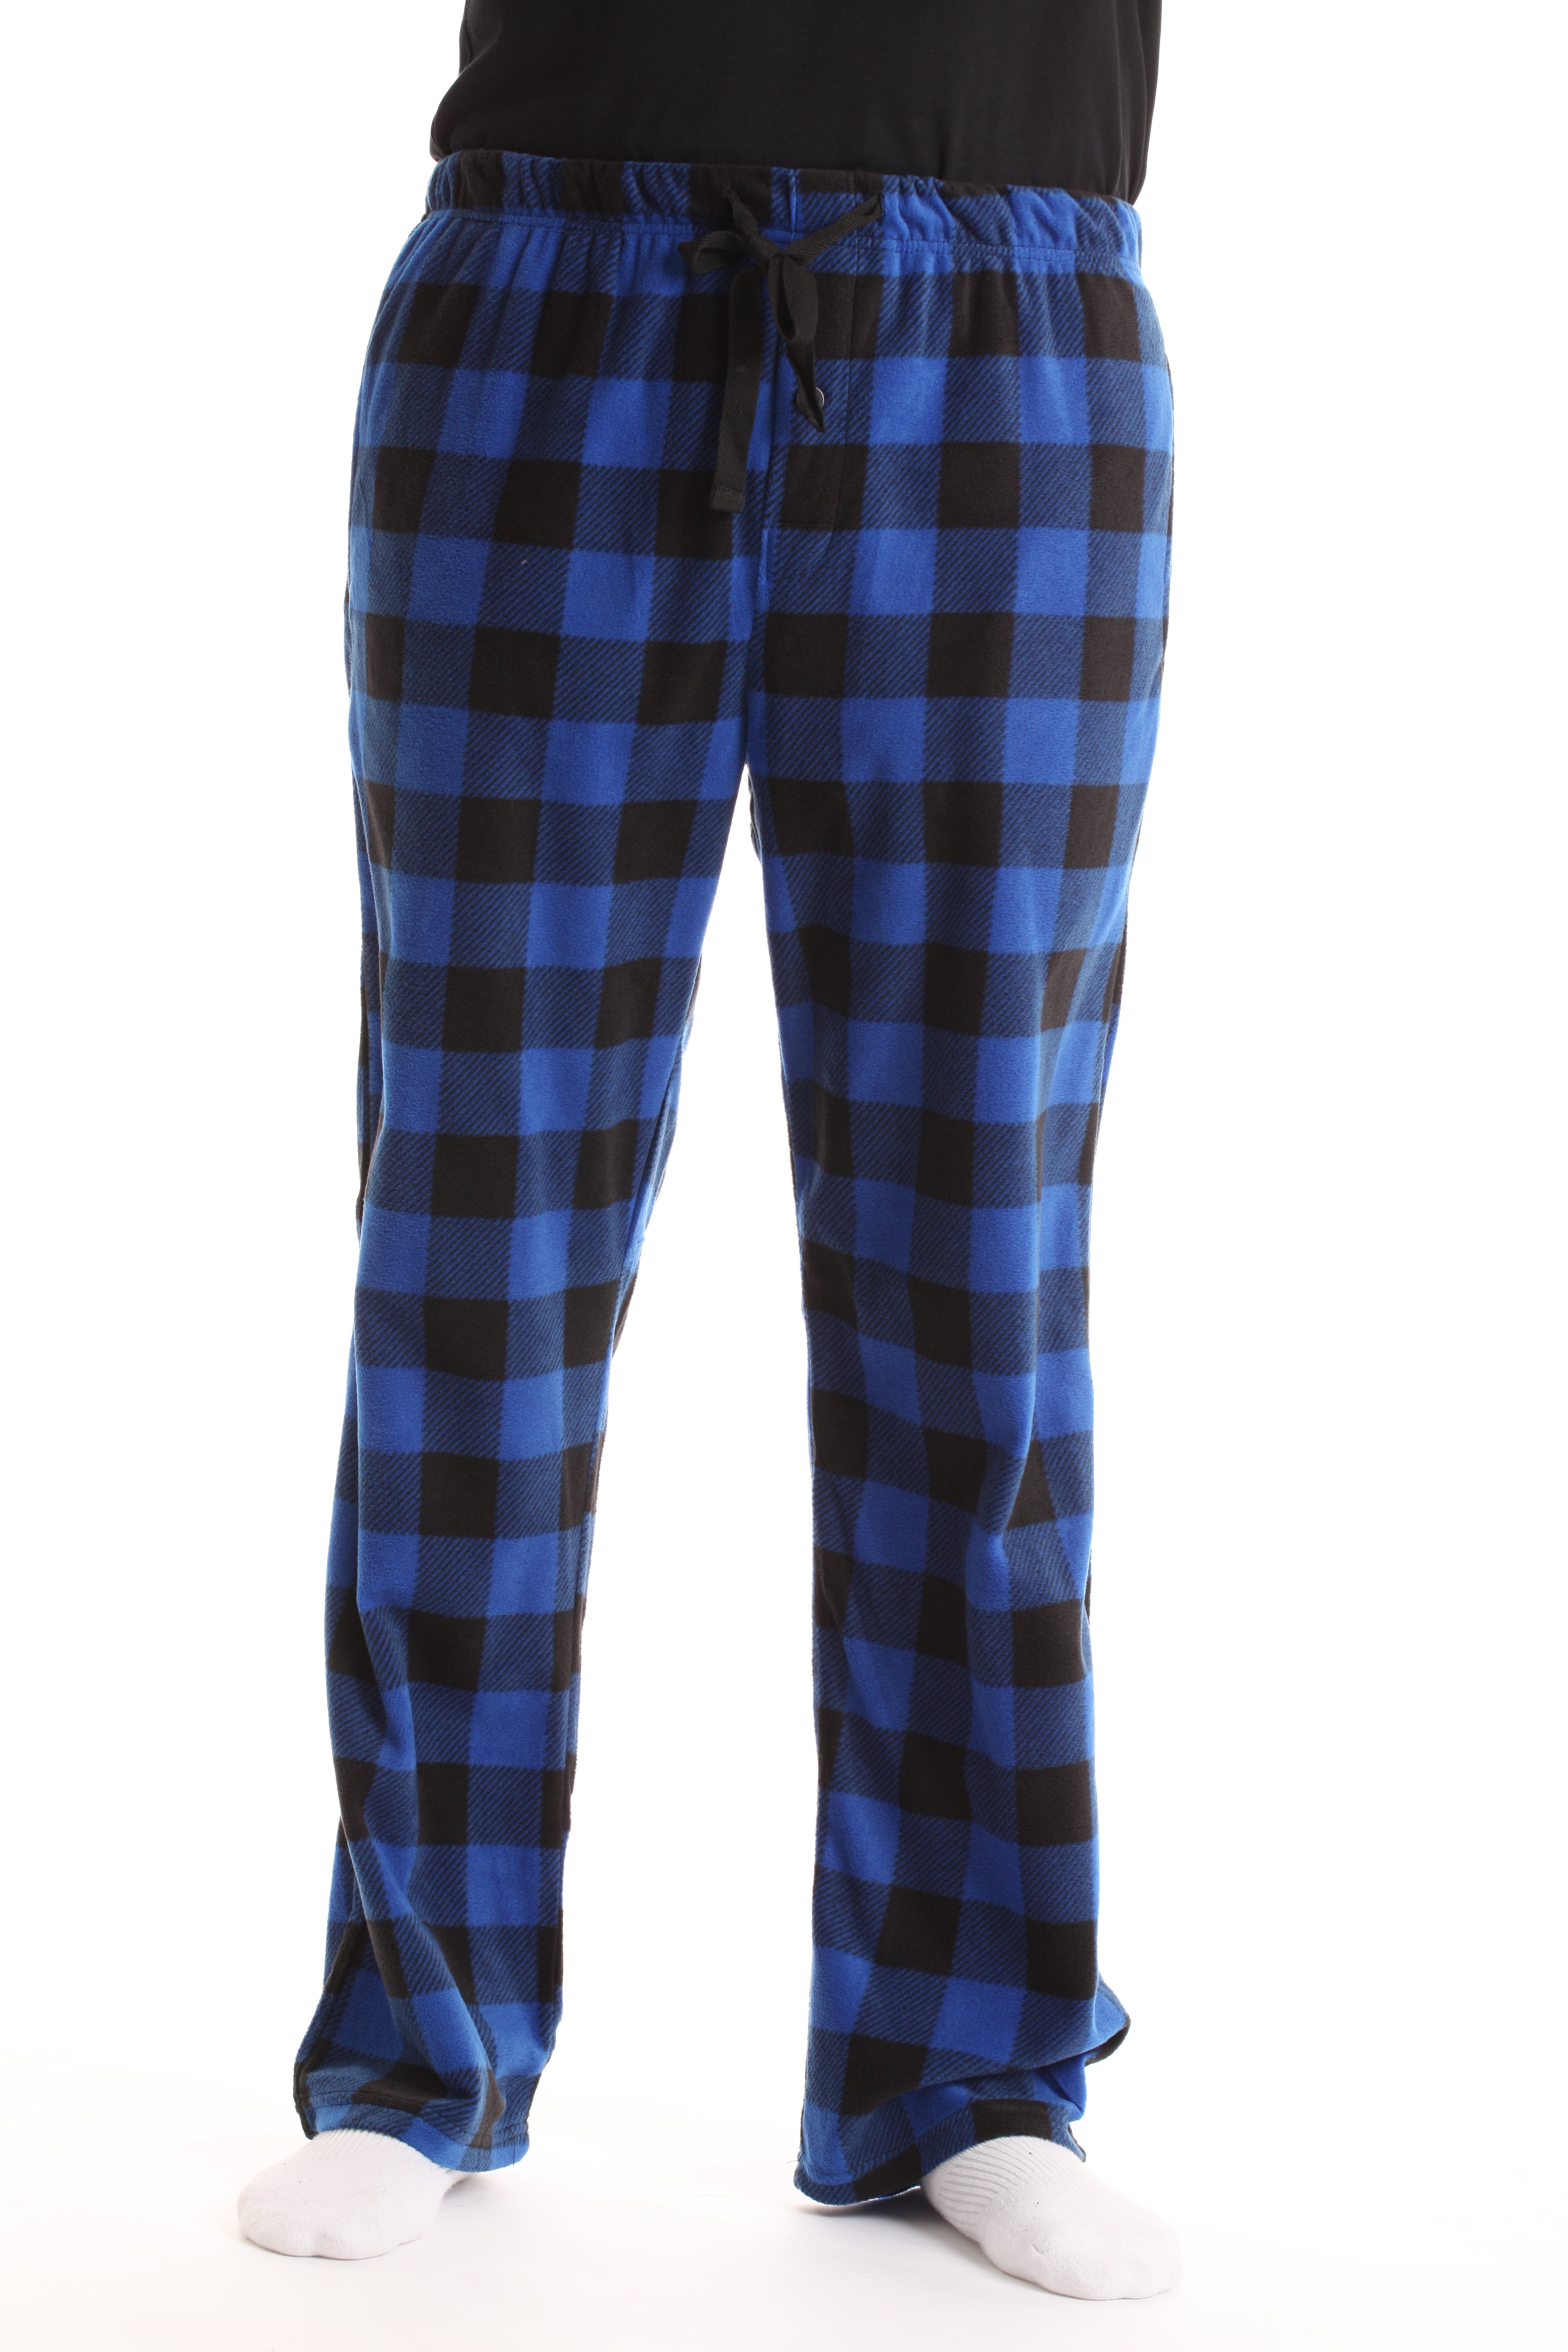 Followme - #FollowMe Microfleece Mens Pajama Pants with Pockets (Blue ...